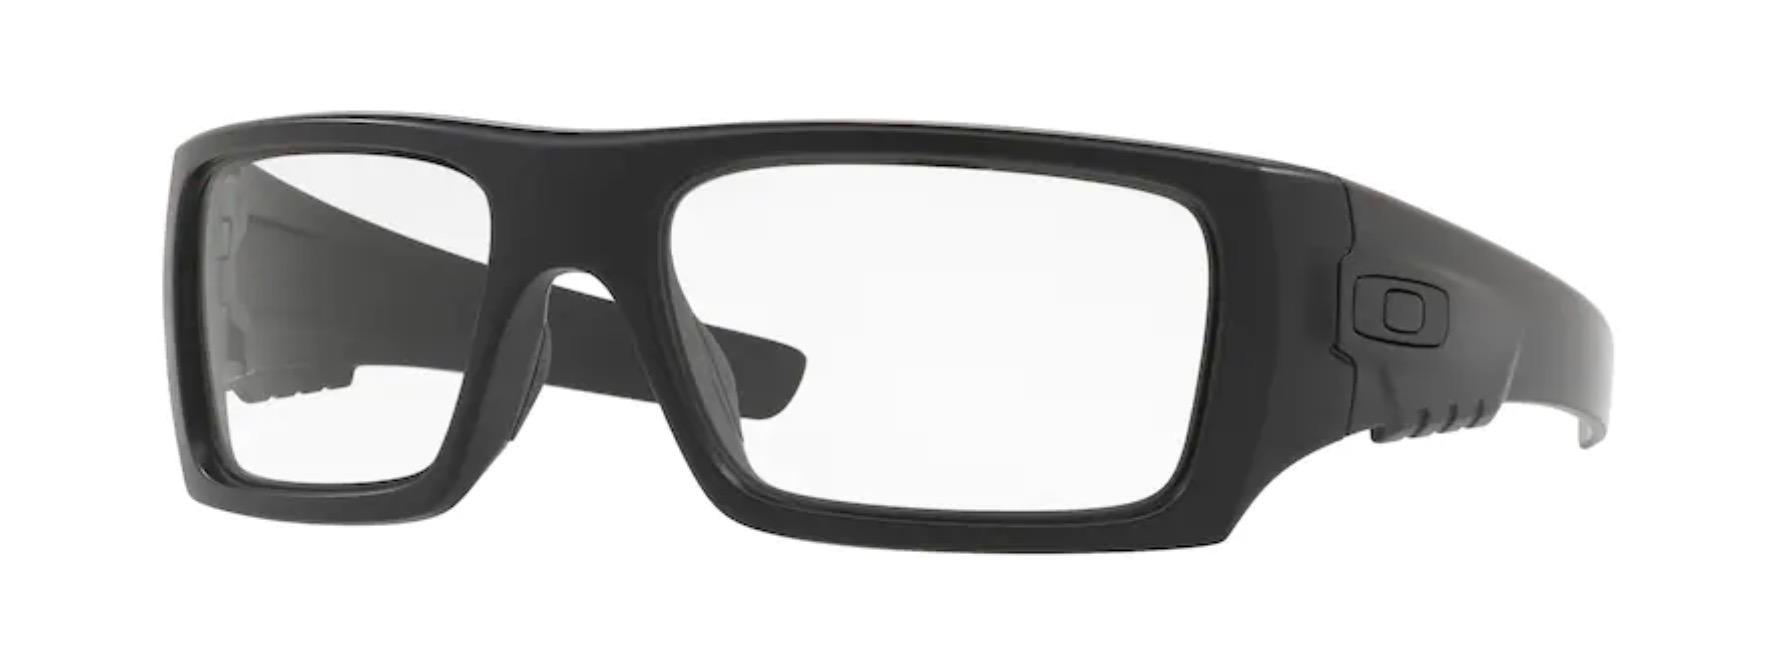 Phillips Safety RG-17007A Economy Radiation Glasses Model 17007A